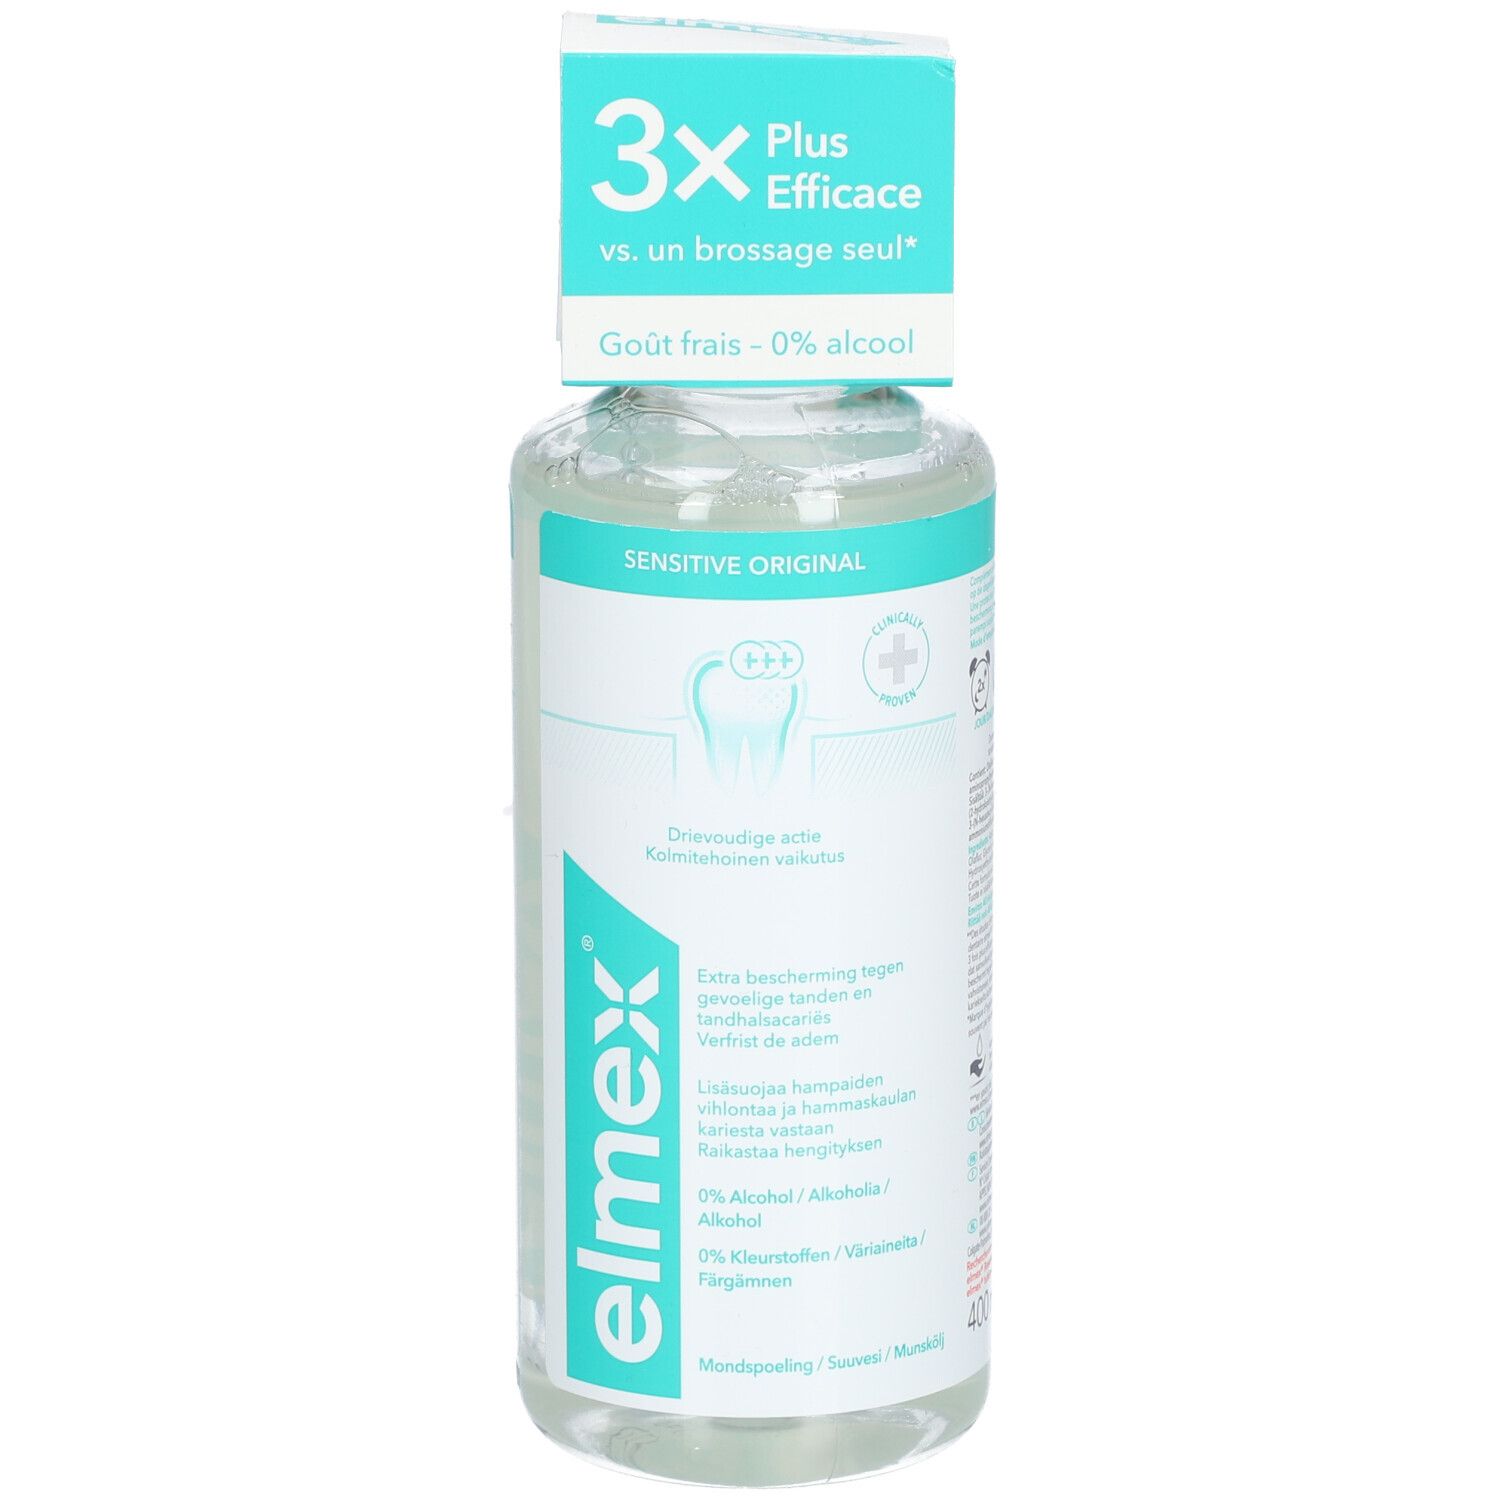 elmex® sensitive solution dentaire protection caries